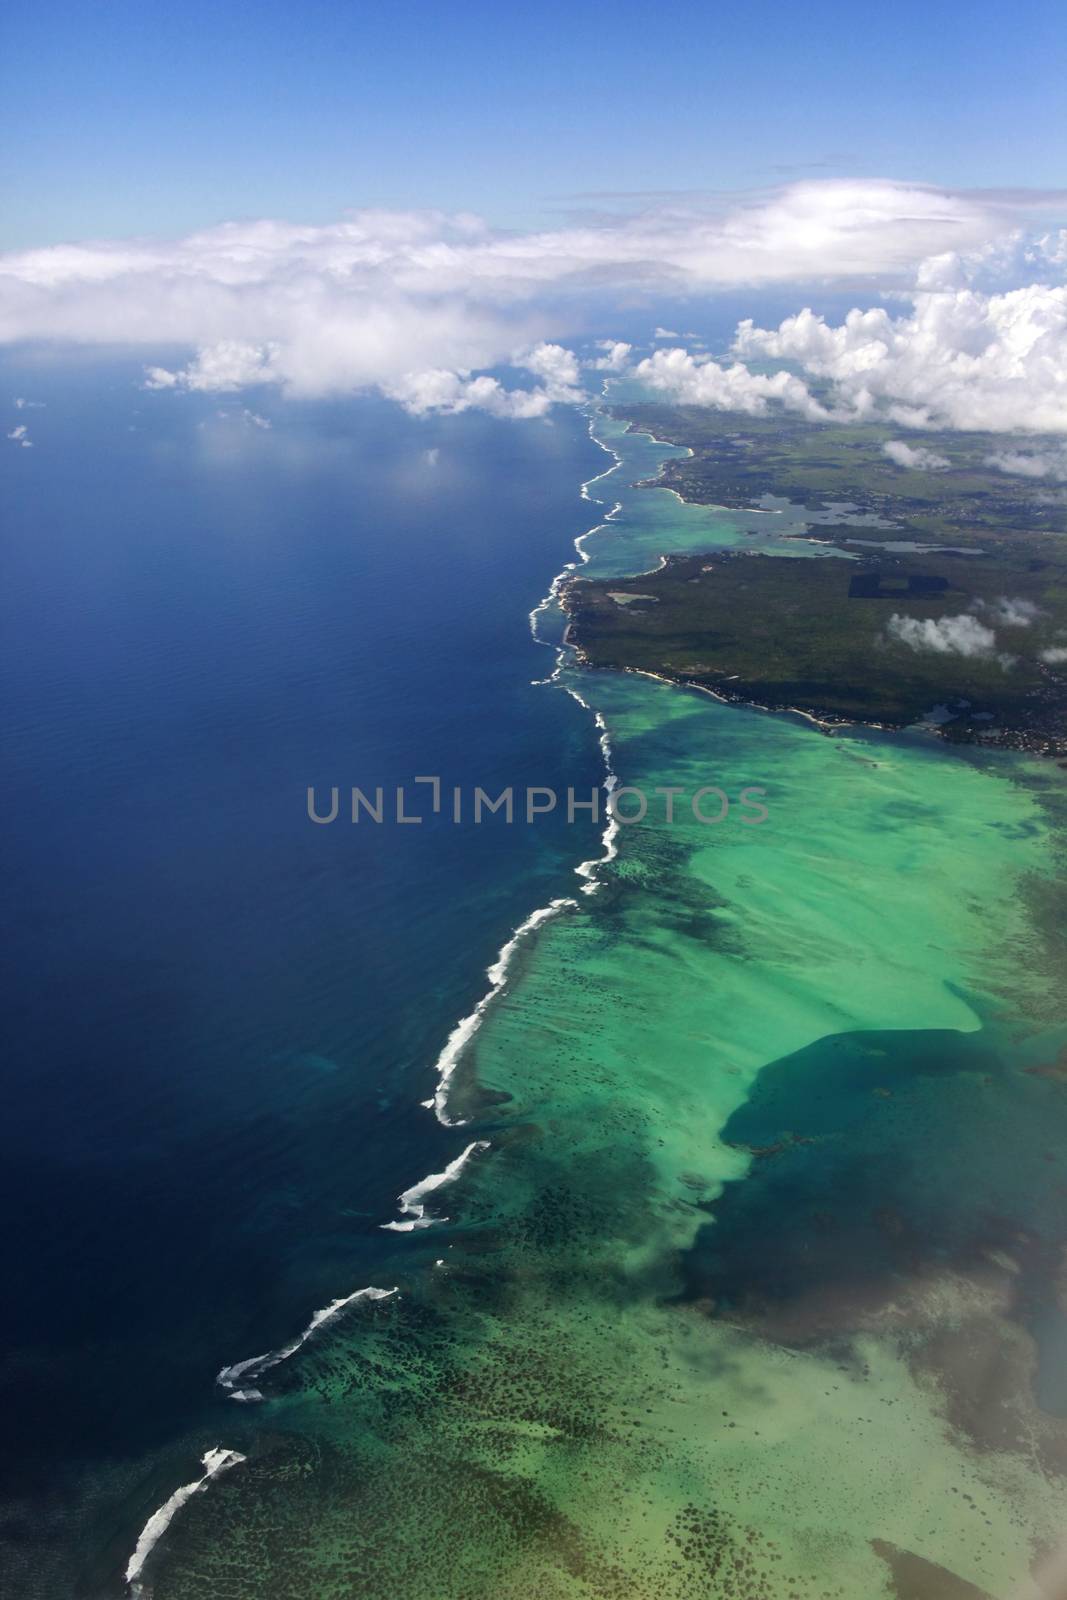 Mauritius sky view showing the beautiful ocean